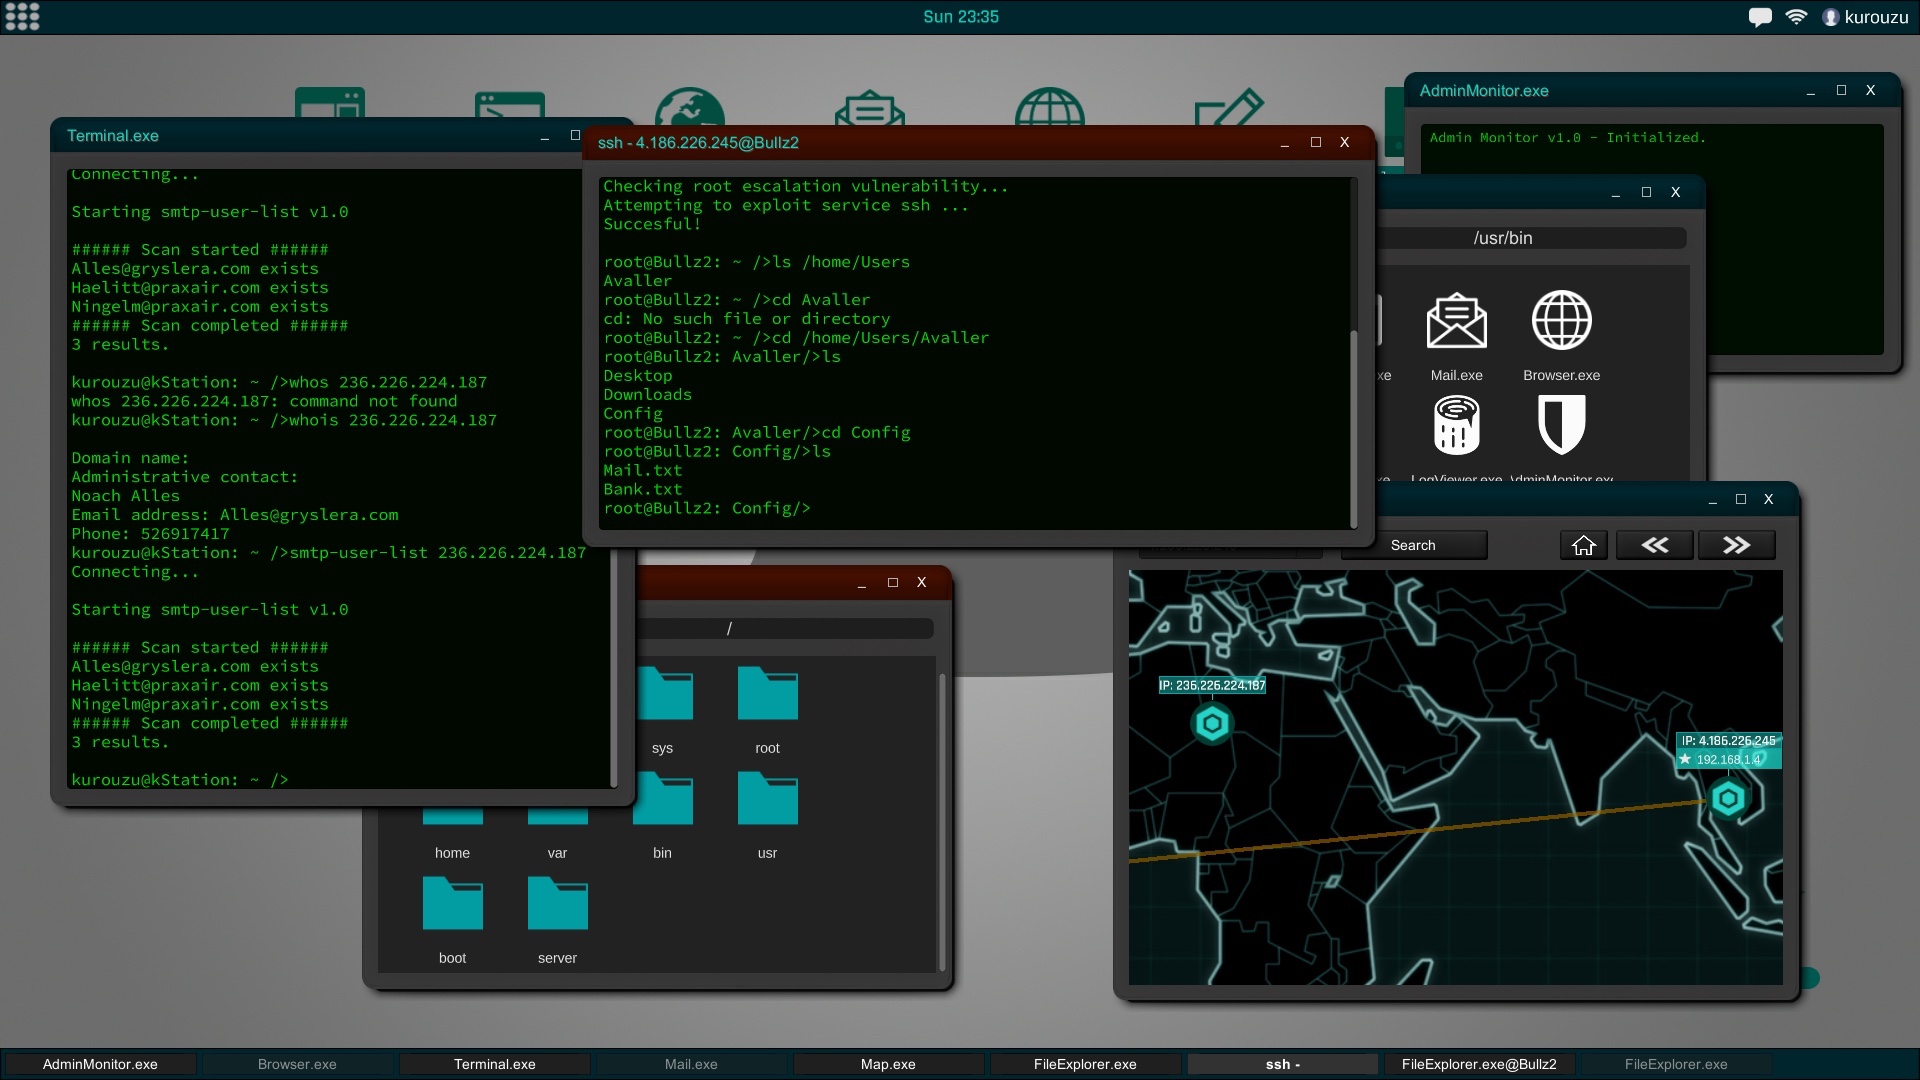 Grey Hack Game Review MMO Hacking Simulator Game sudo update Grey Hack  #greyhack #hacking #simulator #mmo #hackware…